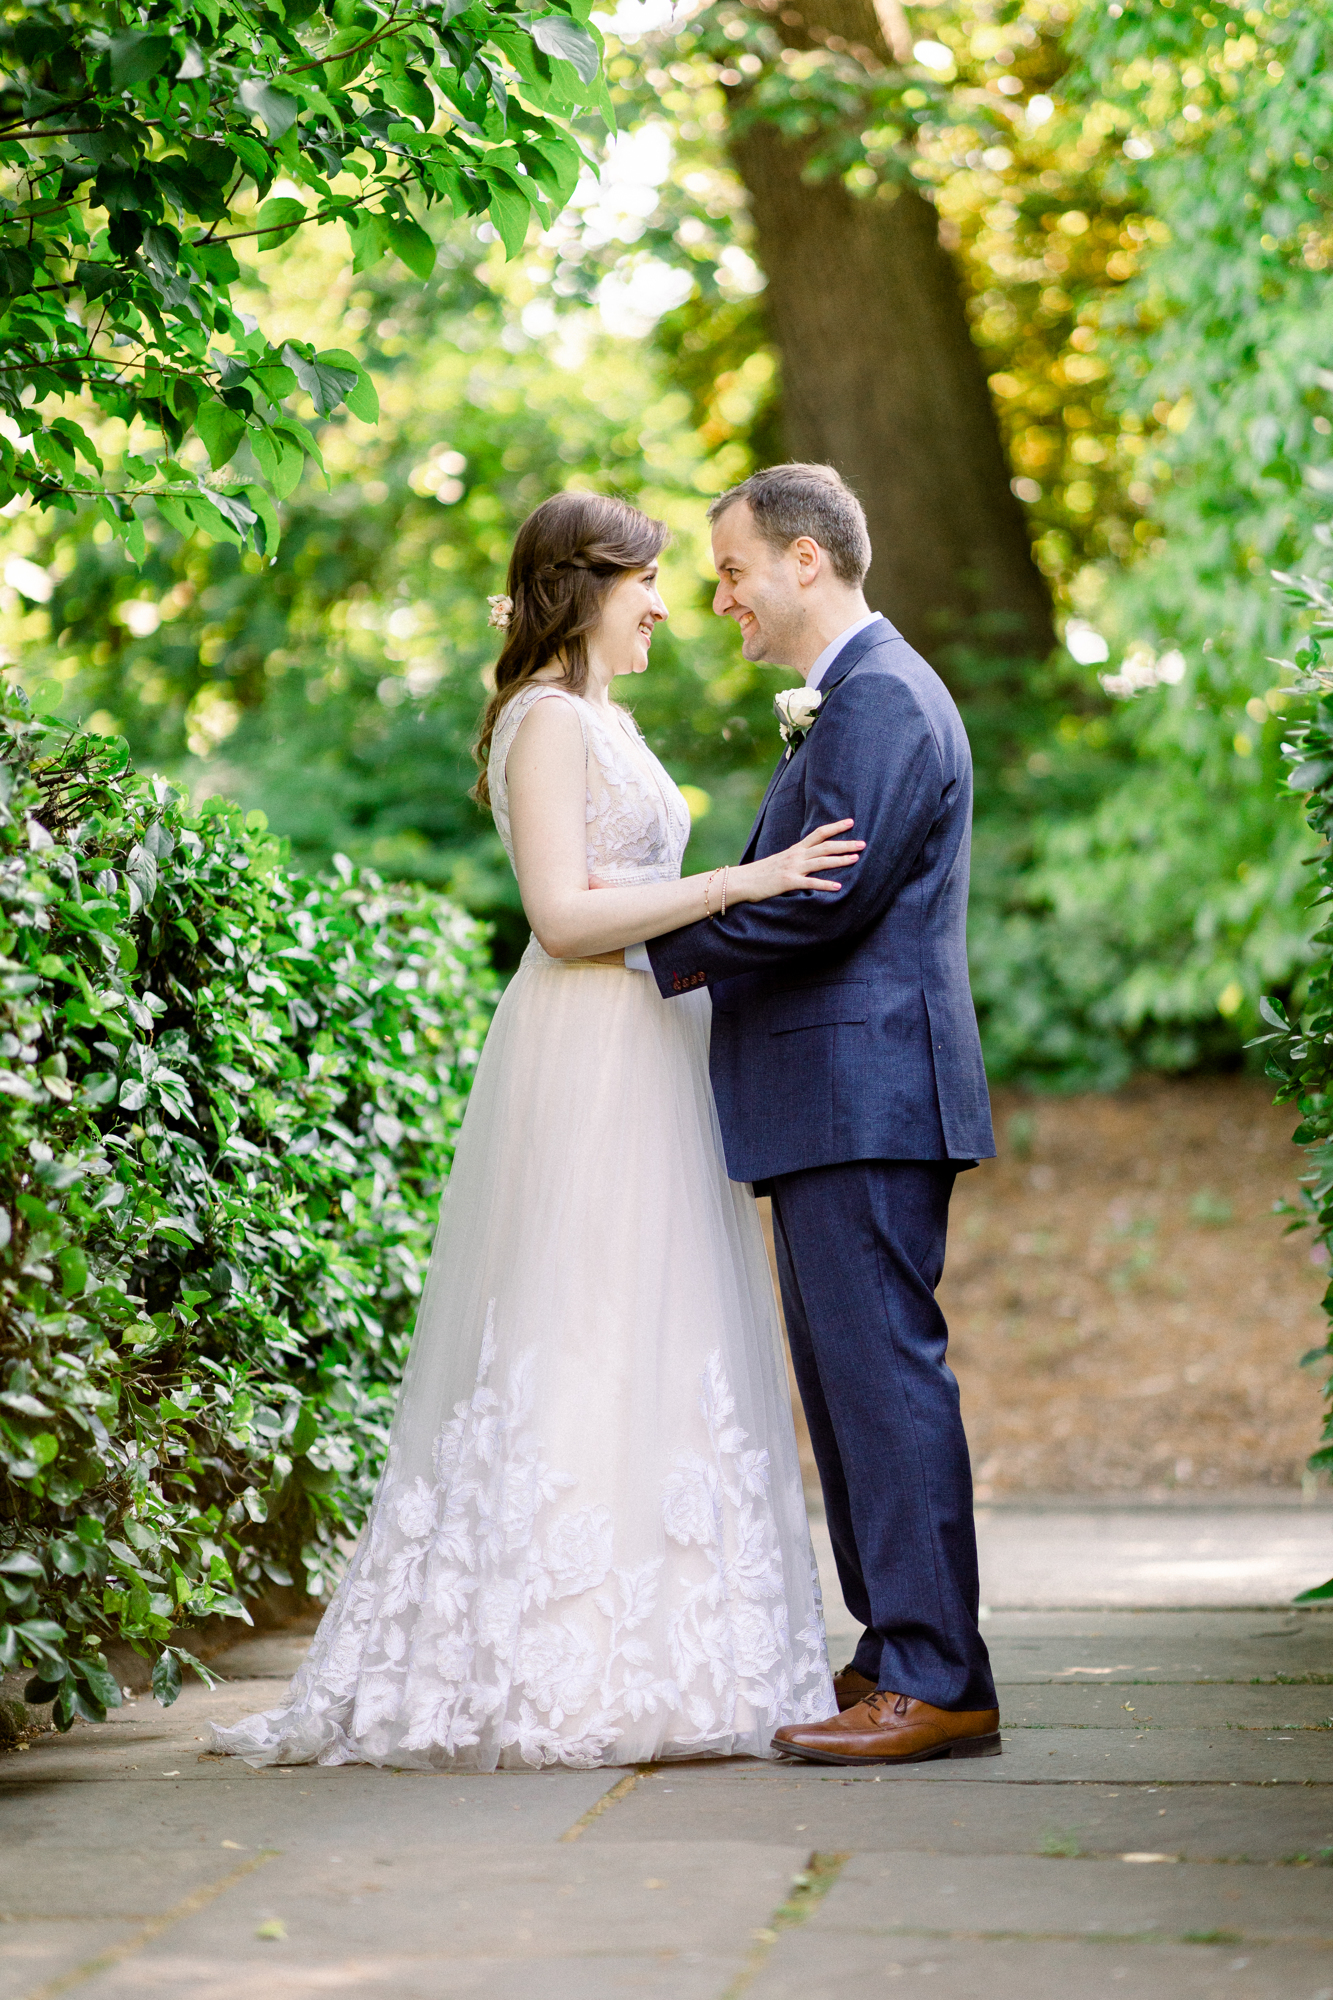 Extraordinary Summer Wedding Photos at the Conservatory Garden in Central Park New York